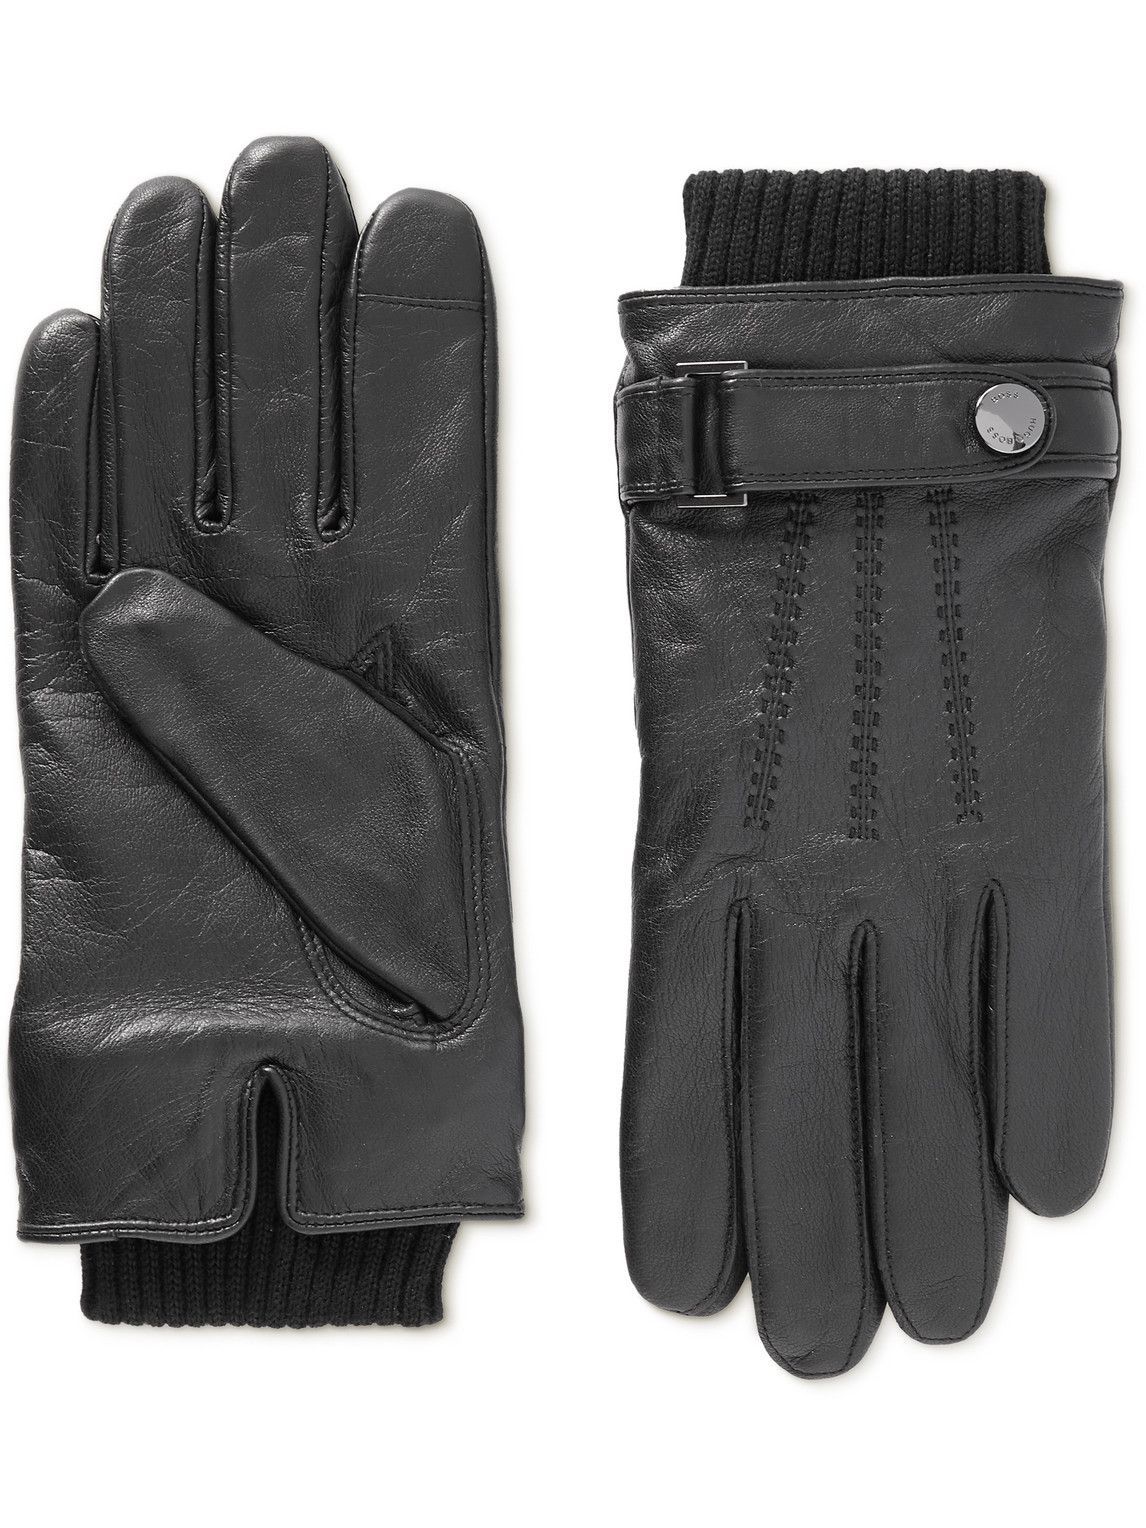 NEW Boss Hugo Boss Men's Black Lambskin Leather Wool Lined Winter Gloves 